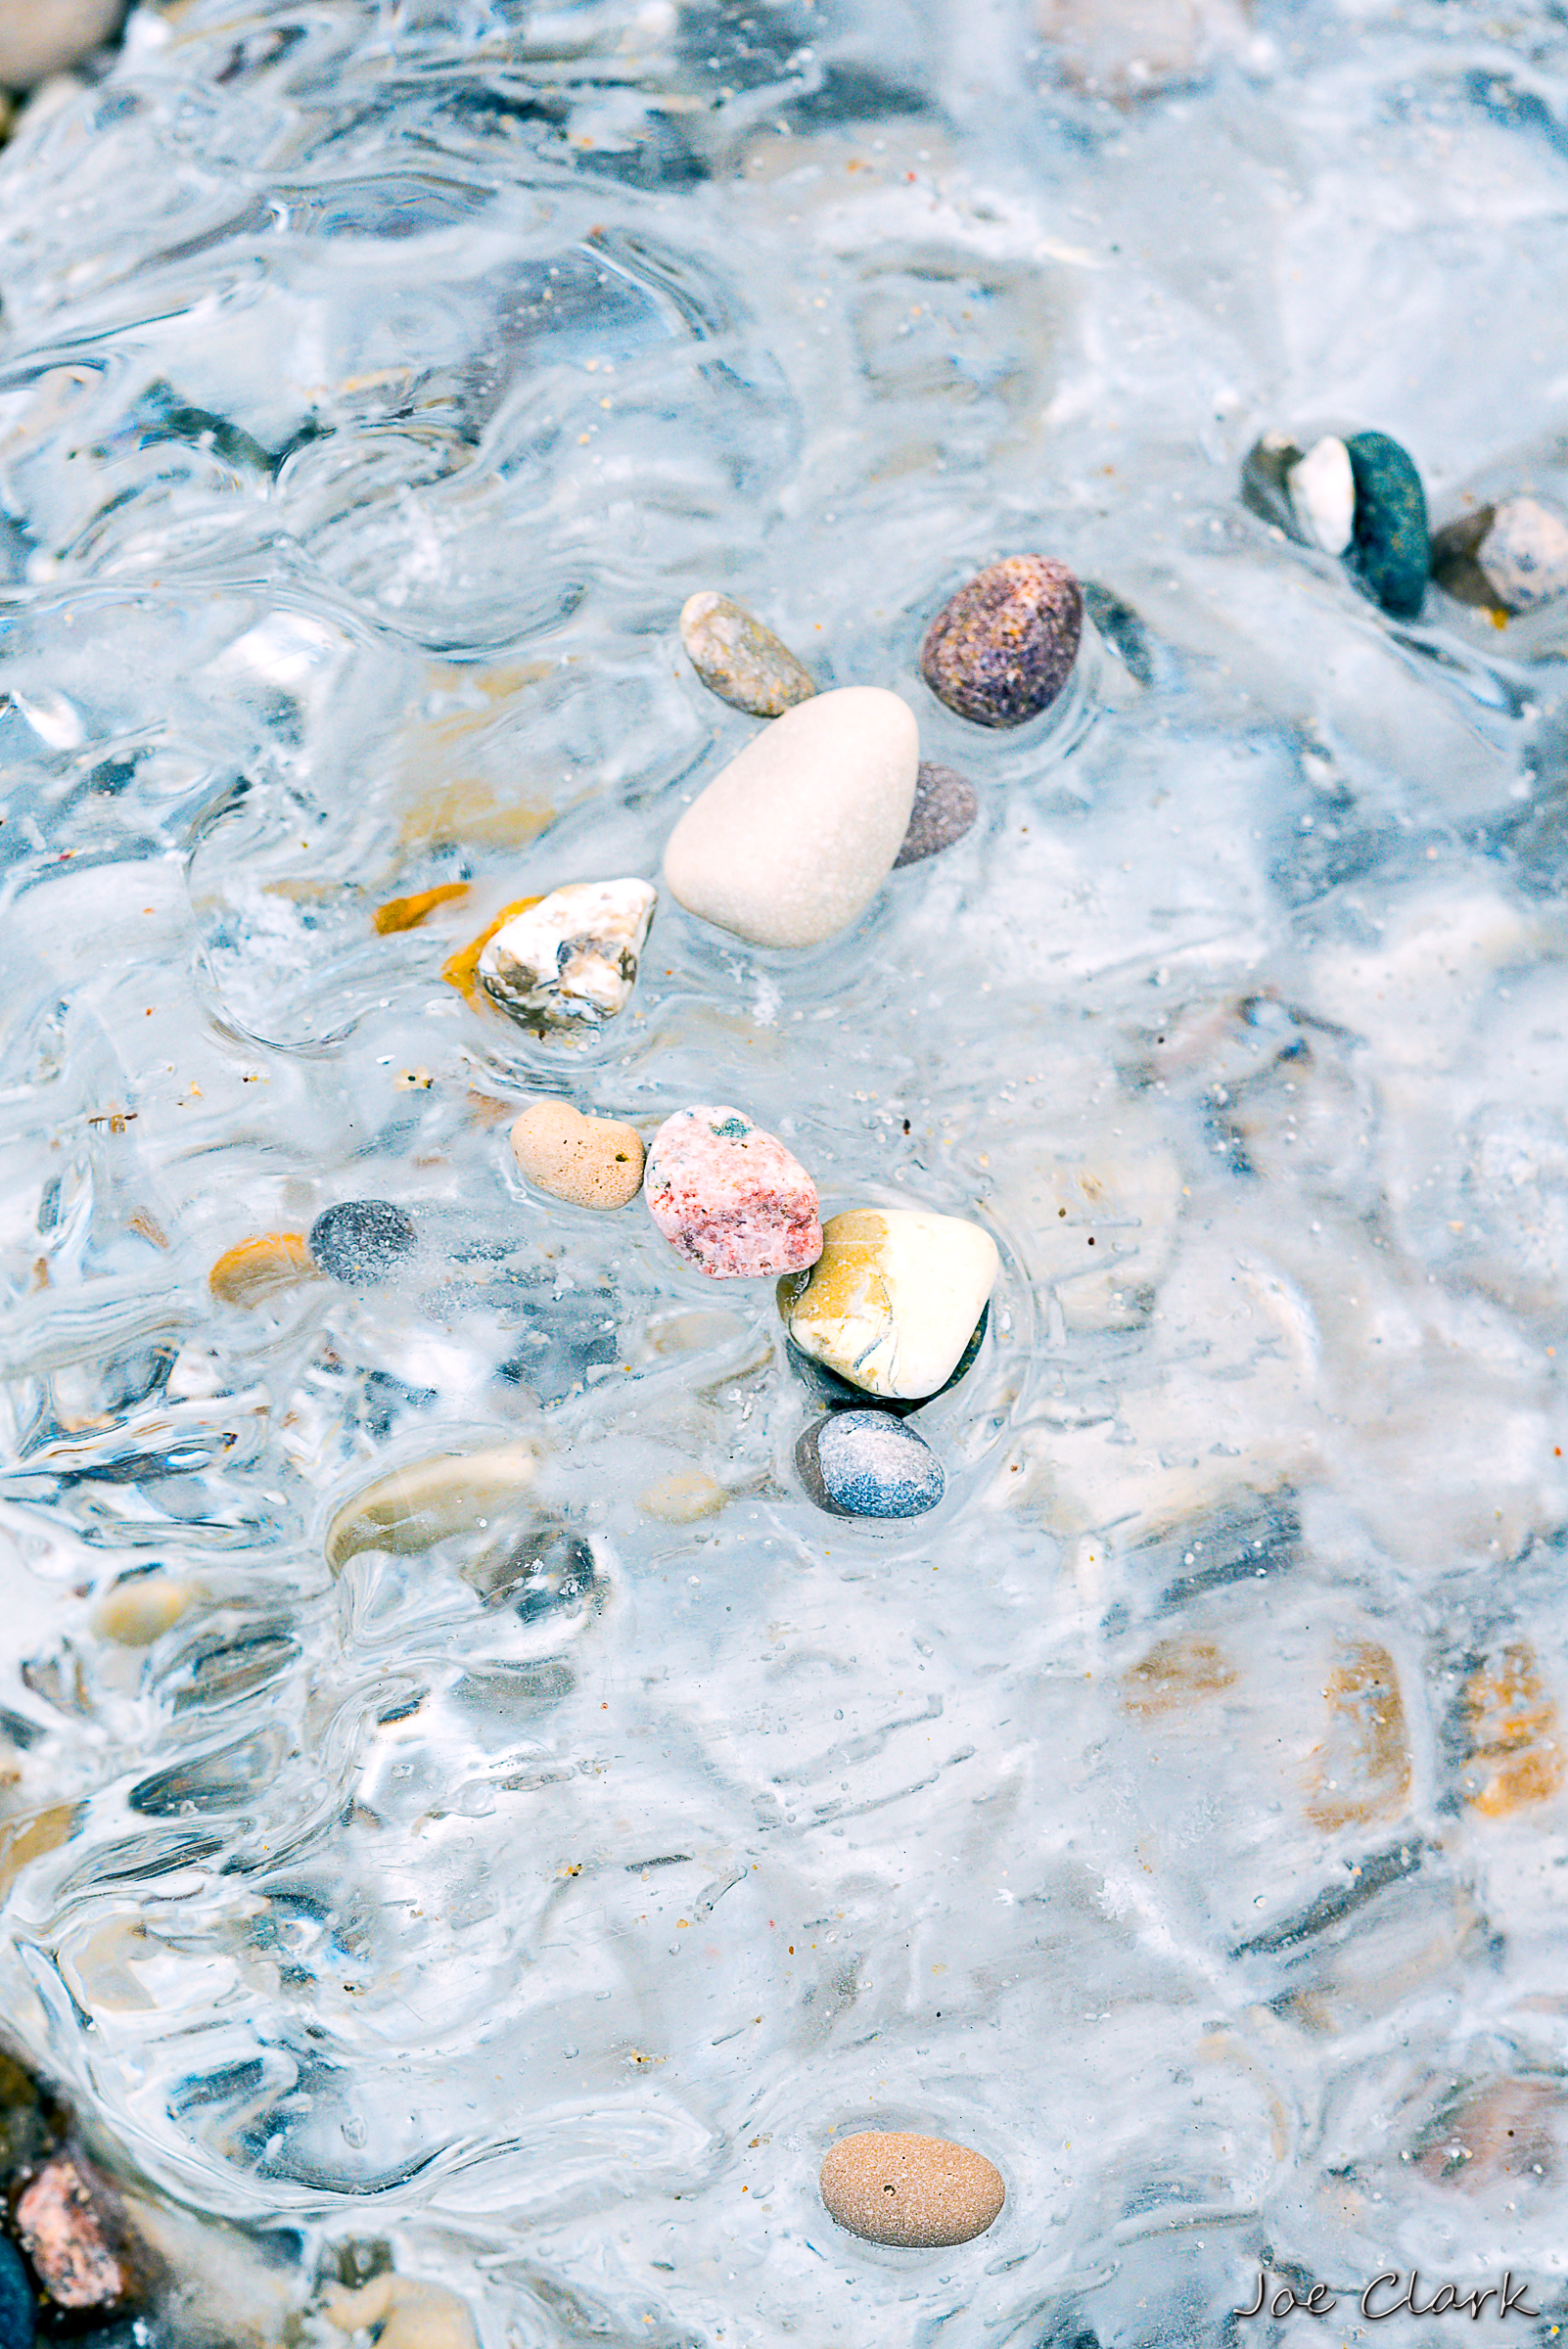 Stone in Ice by Joe Clark American landscape Photographer